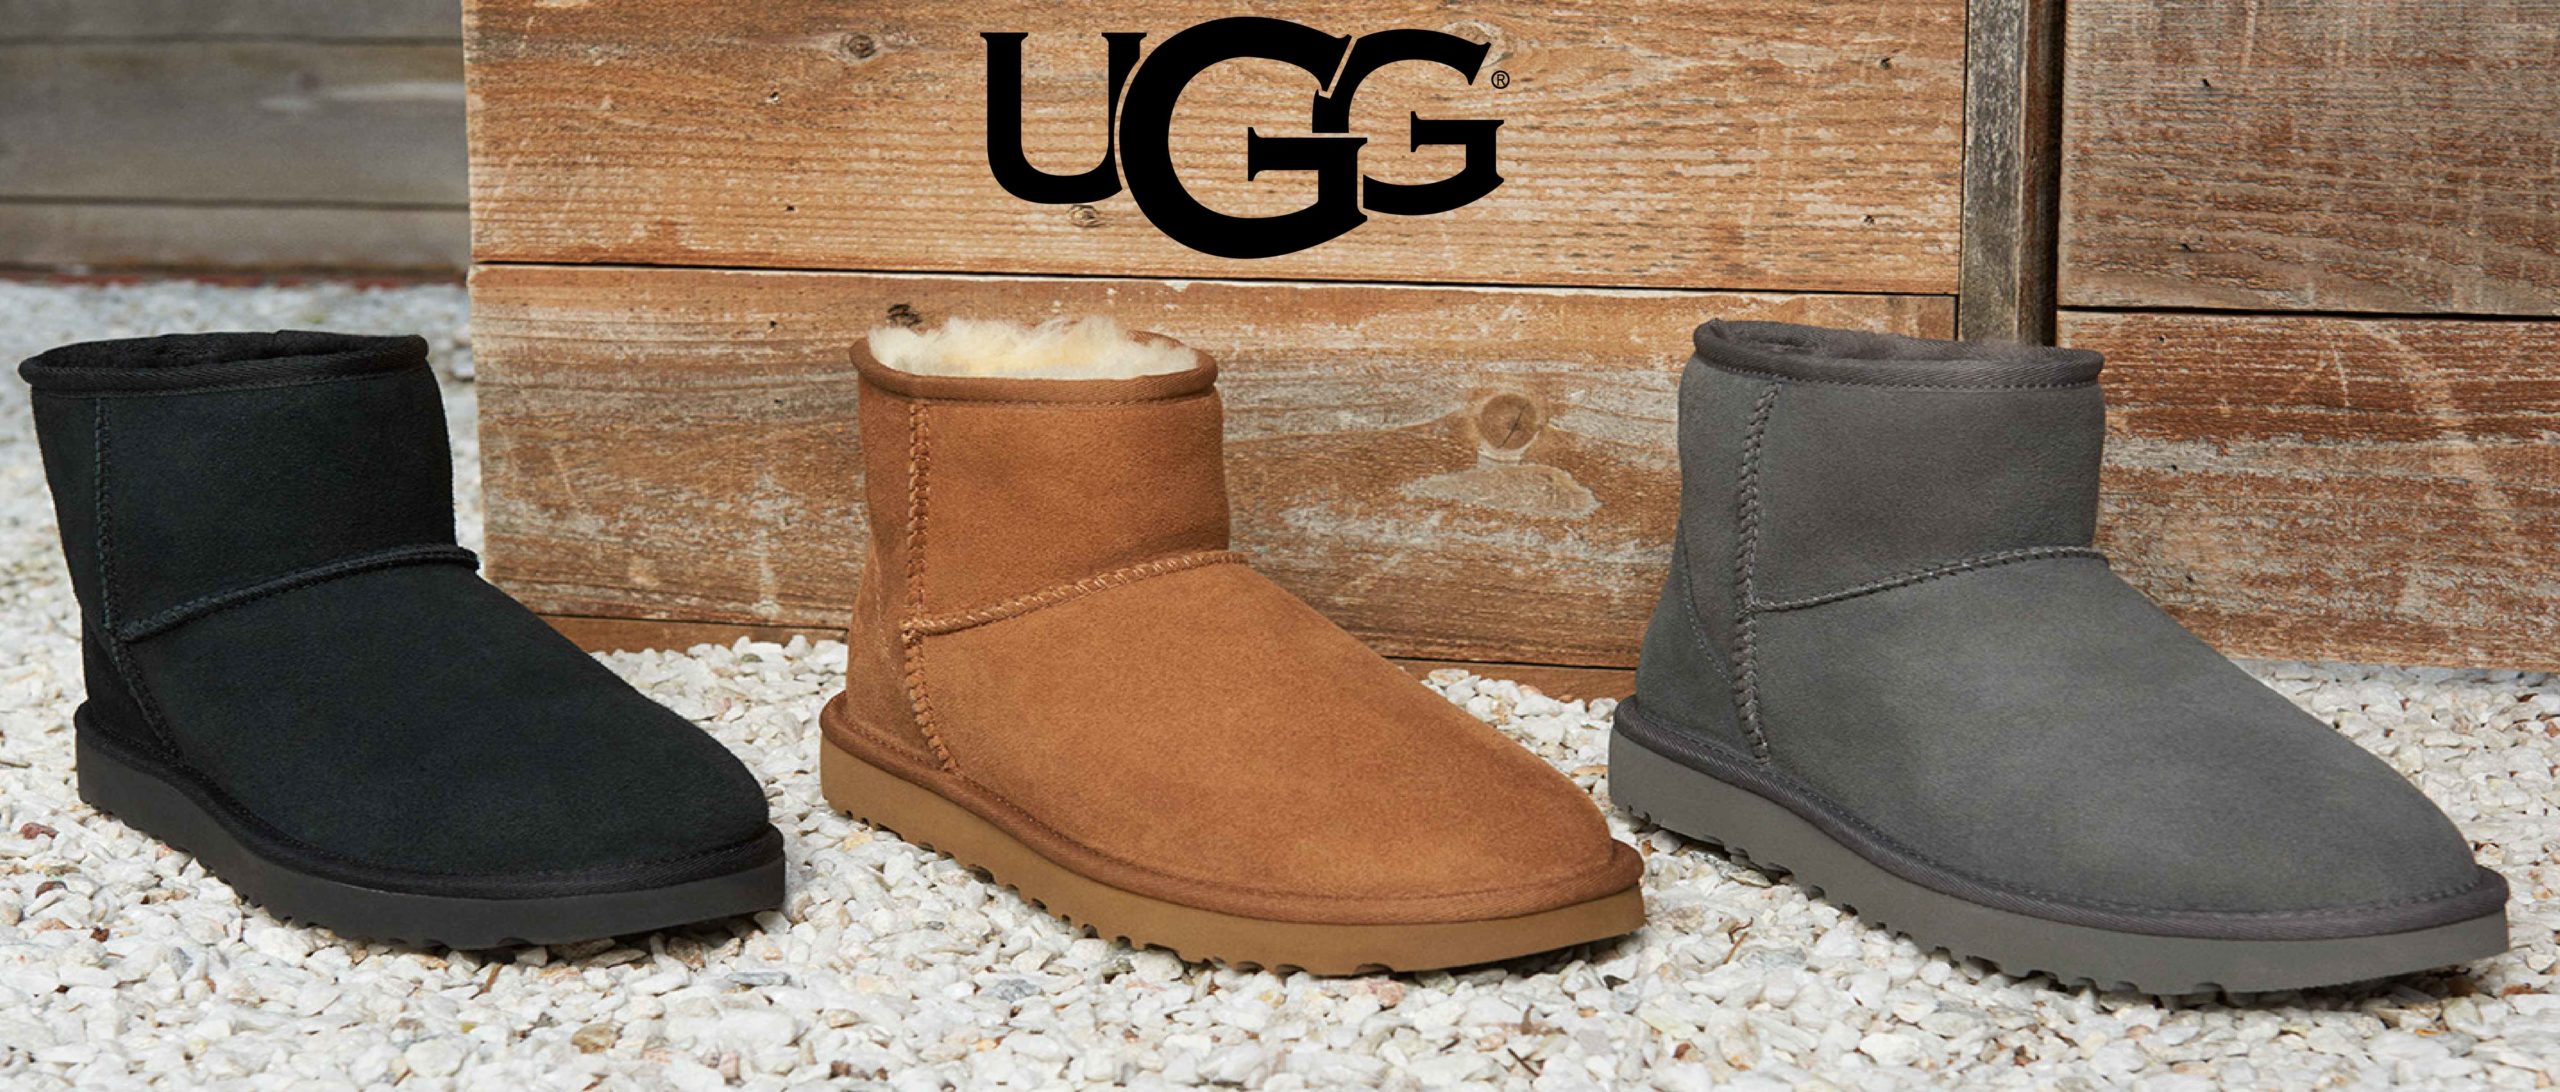 Shop UGG Footwear for women, men, and kids